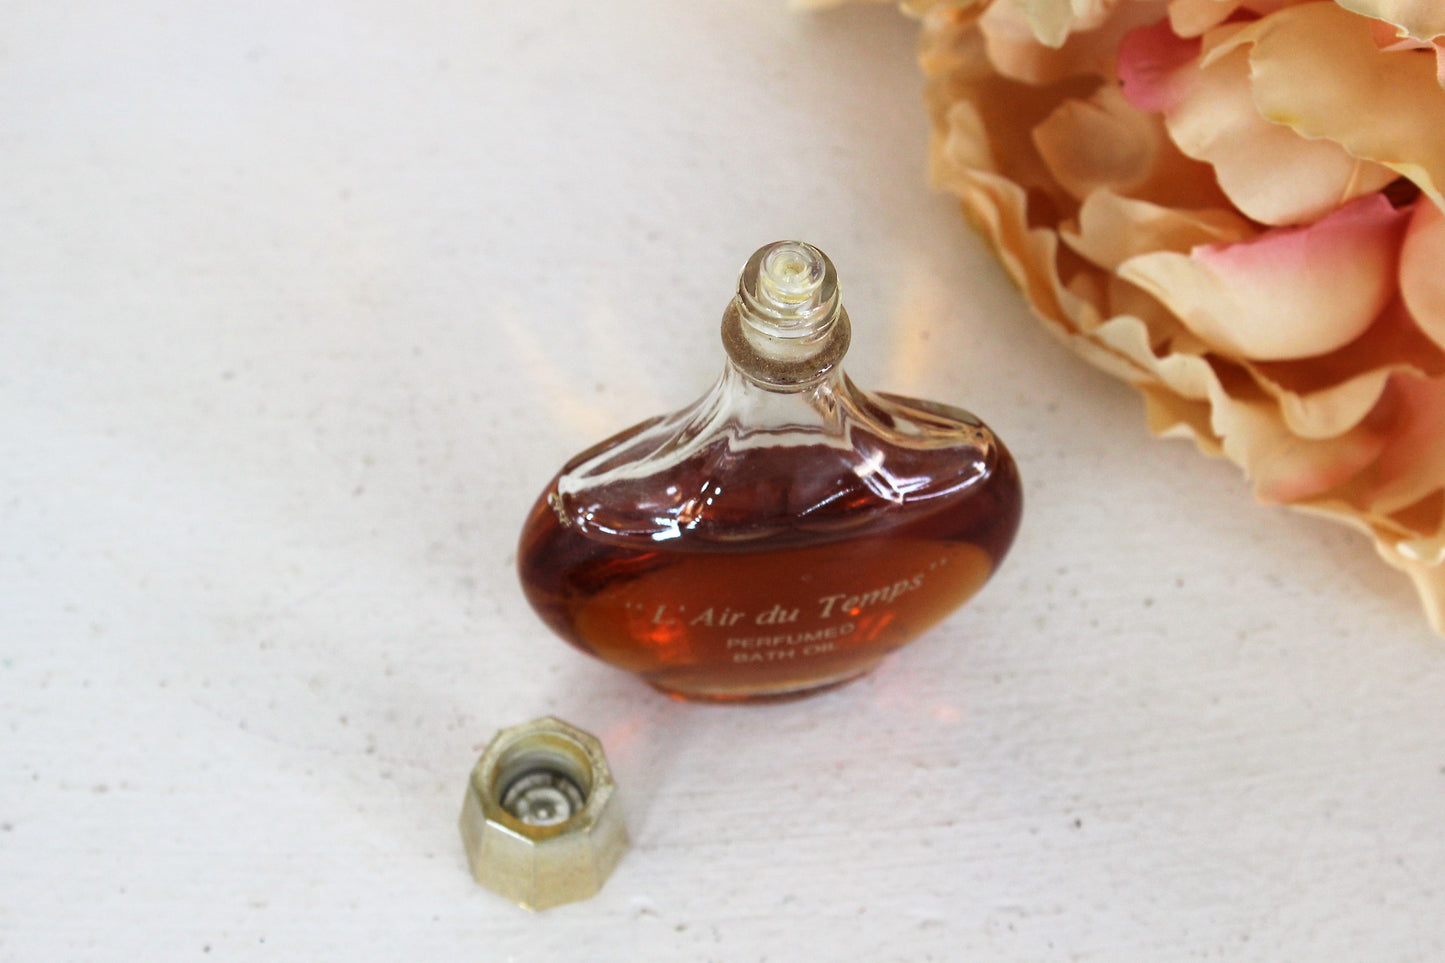 Vintage L'Air Du Temps Perfume Bath Oil 